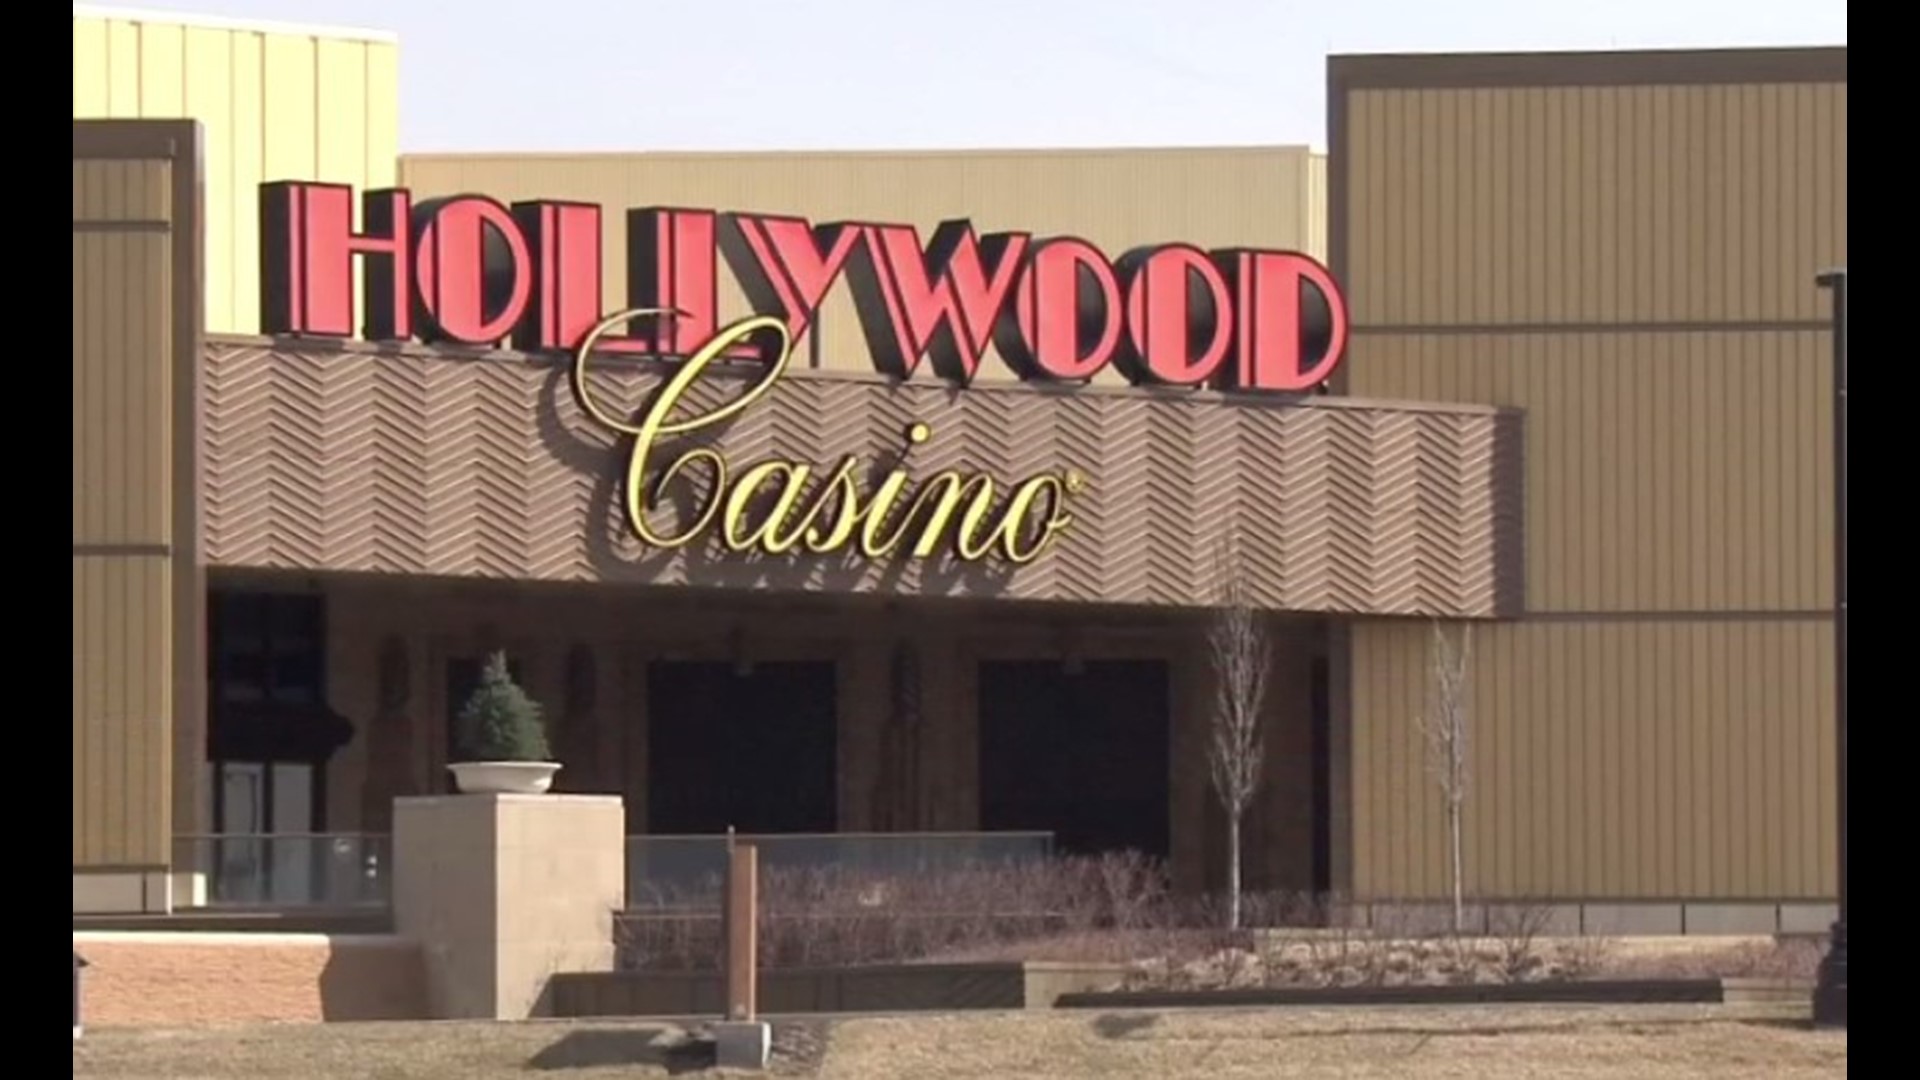 hollywood casino columbus ohio loose slot machines